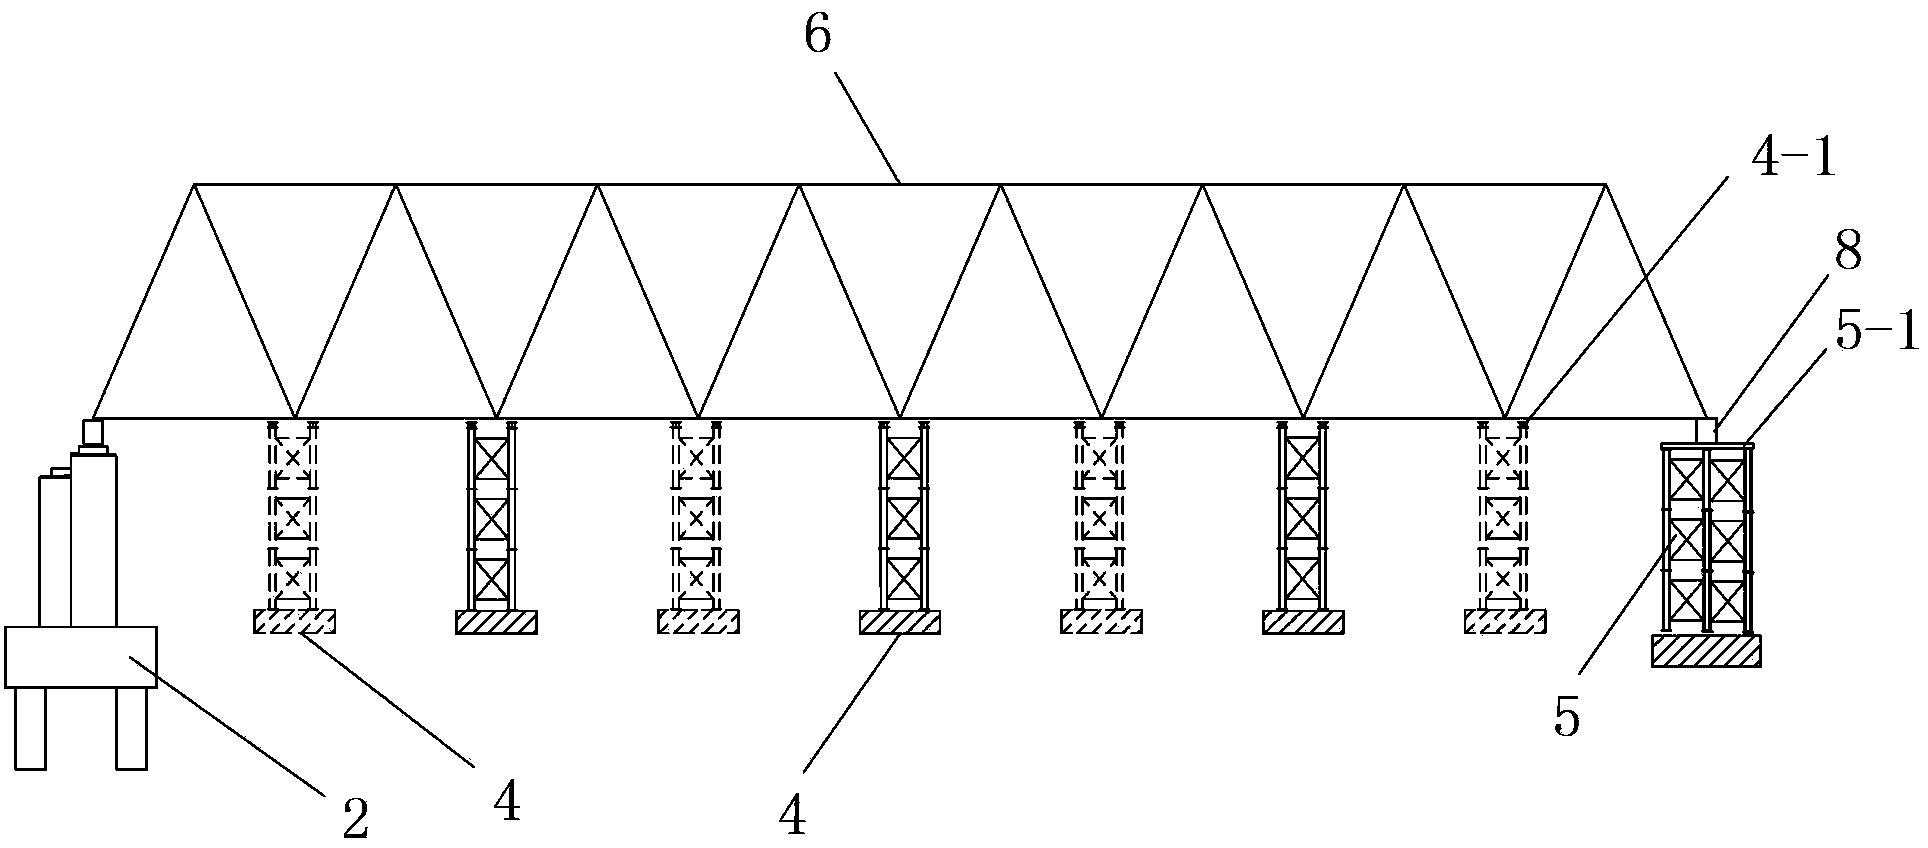 Plane rotation construction technique for steel truss girder for existing bridge spanning construction